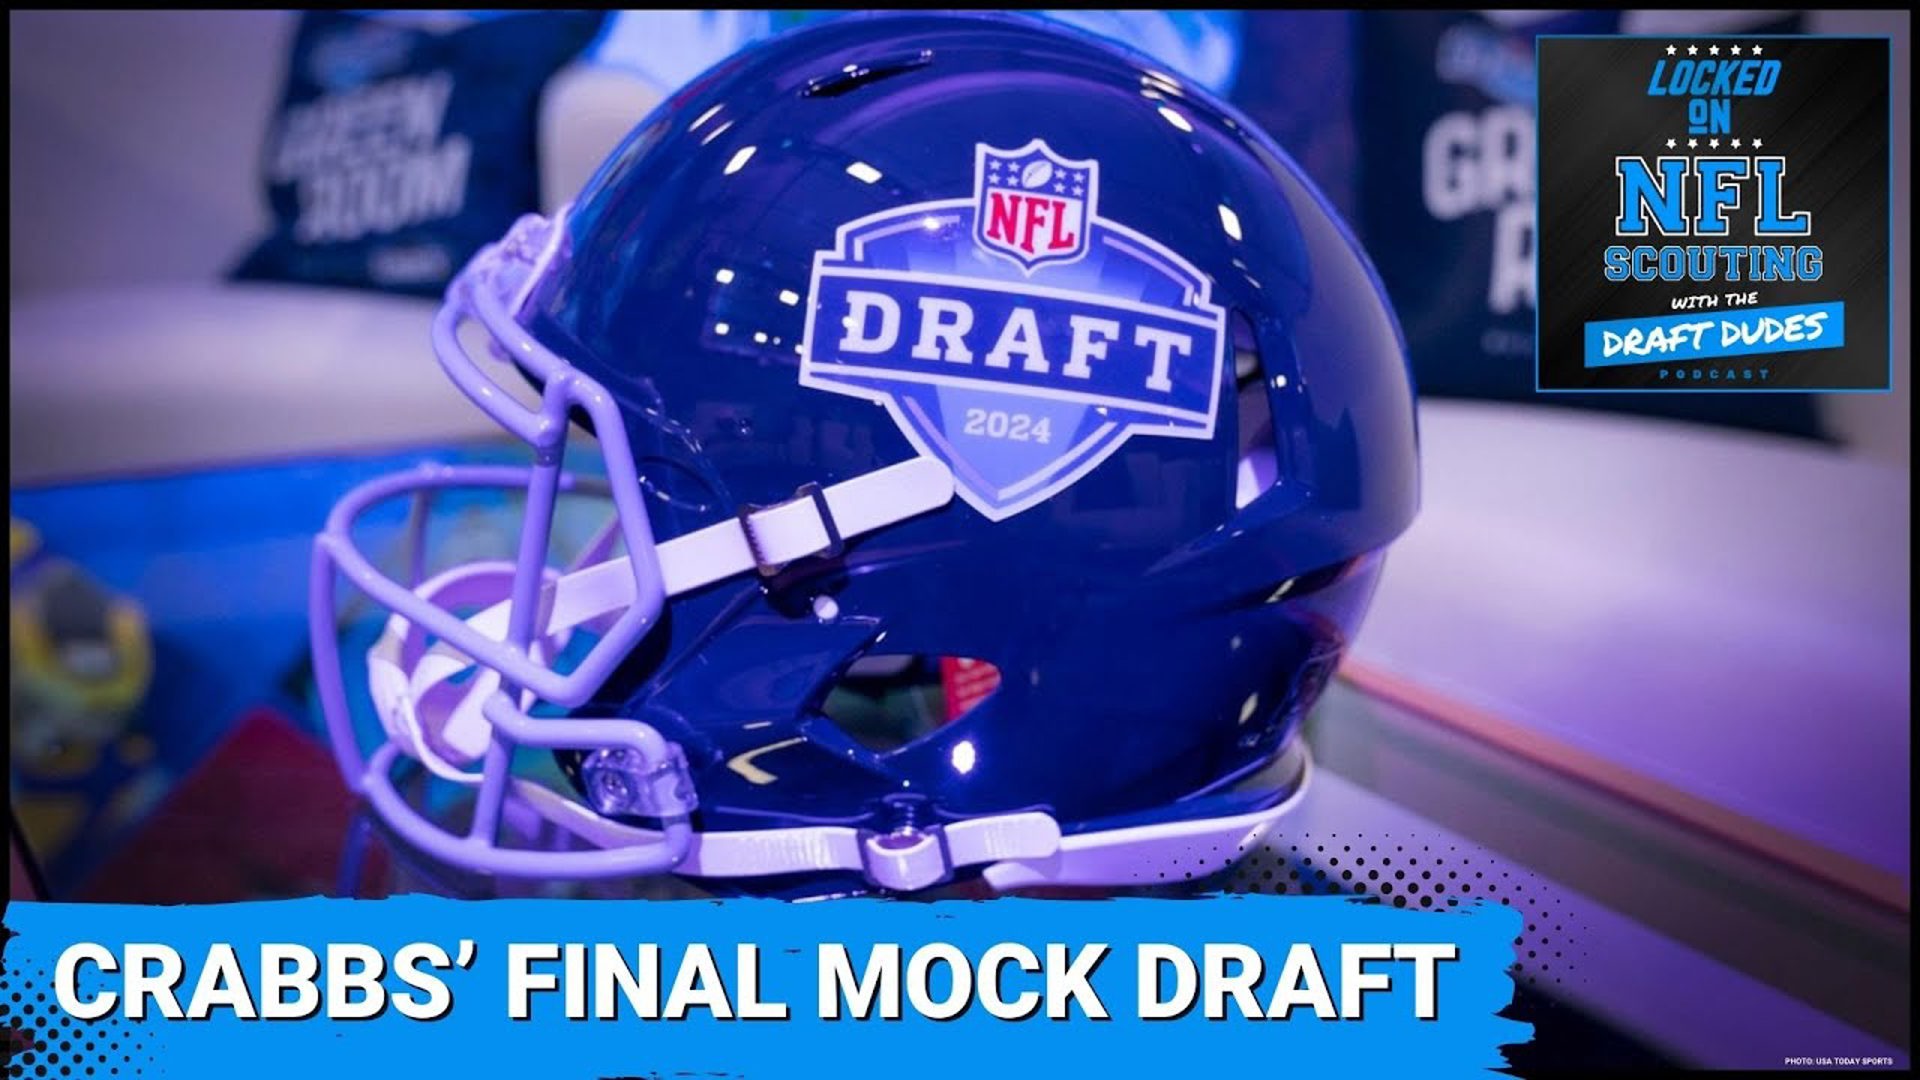 Kyle Crabbs' Final 2024 NFL Mock Draft QB Run Is REAL!